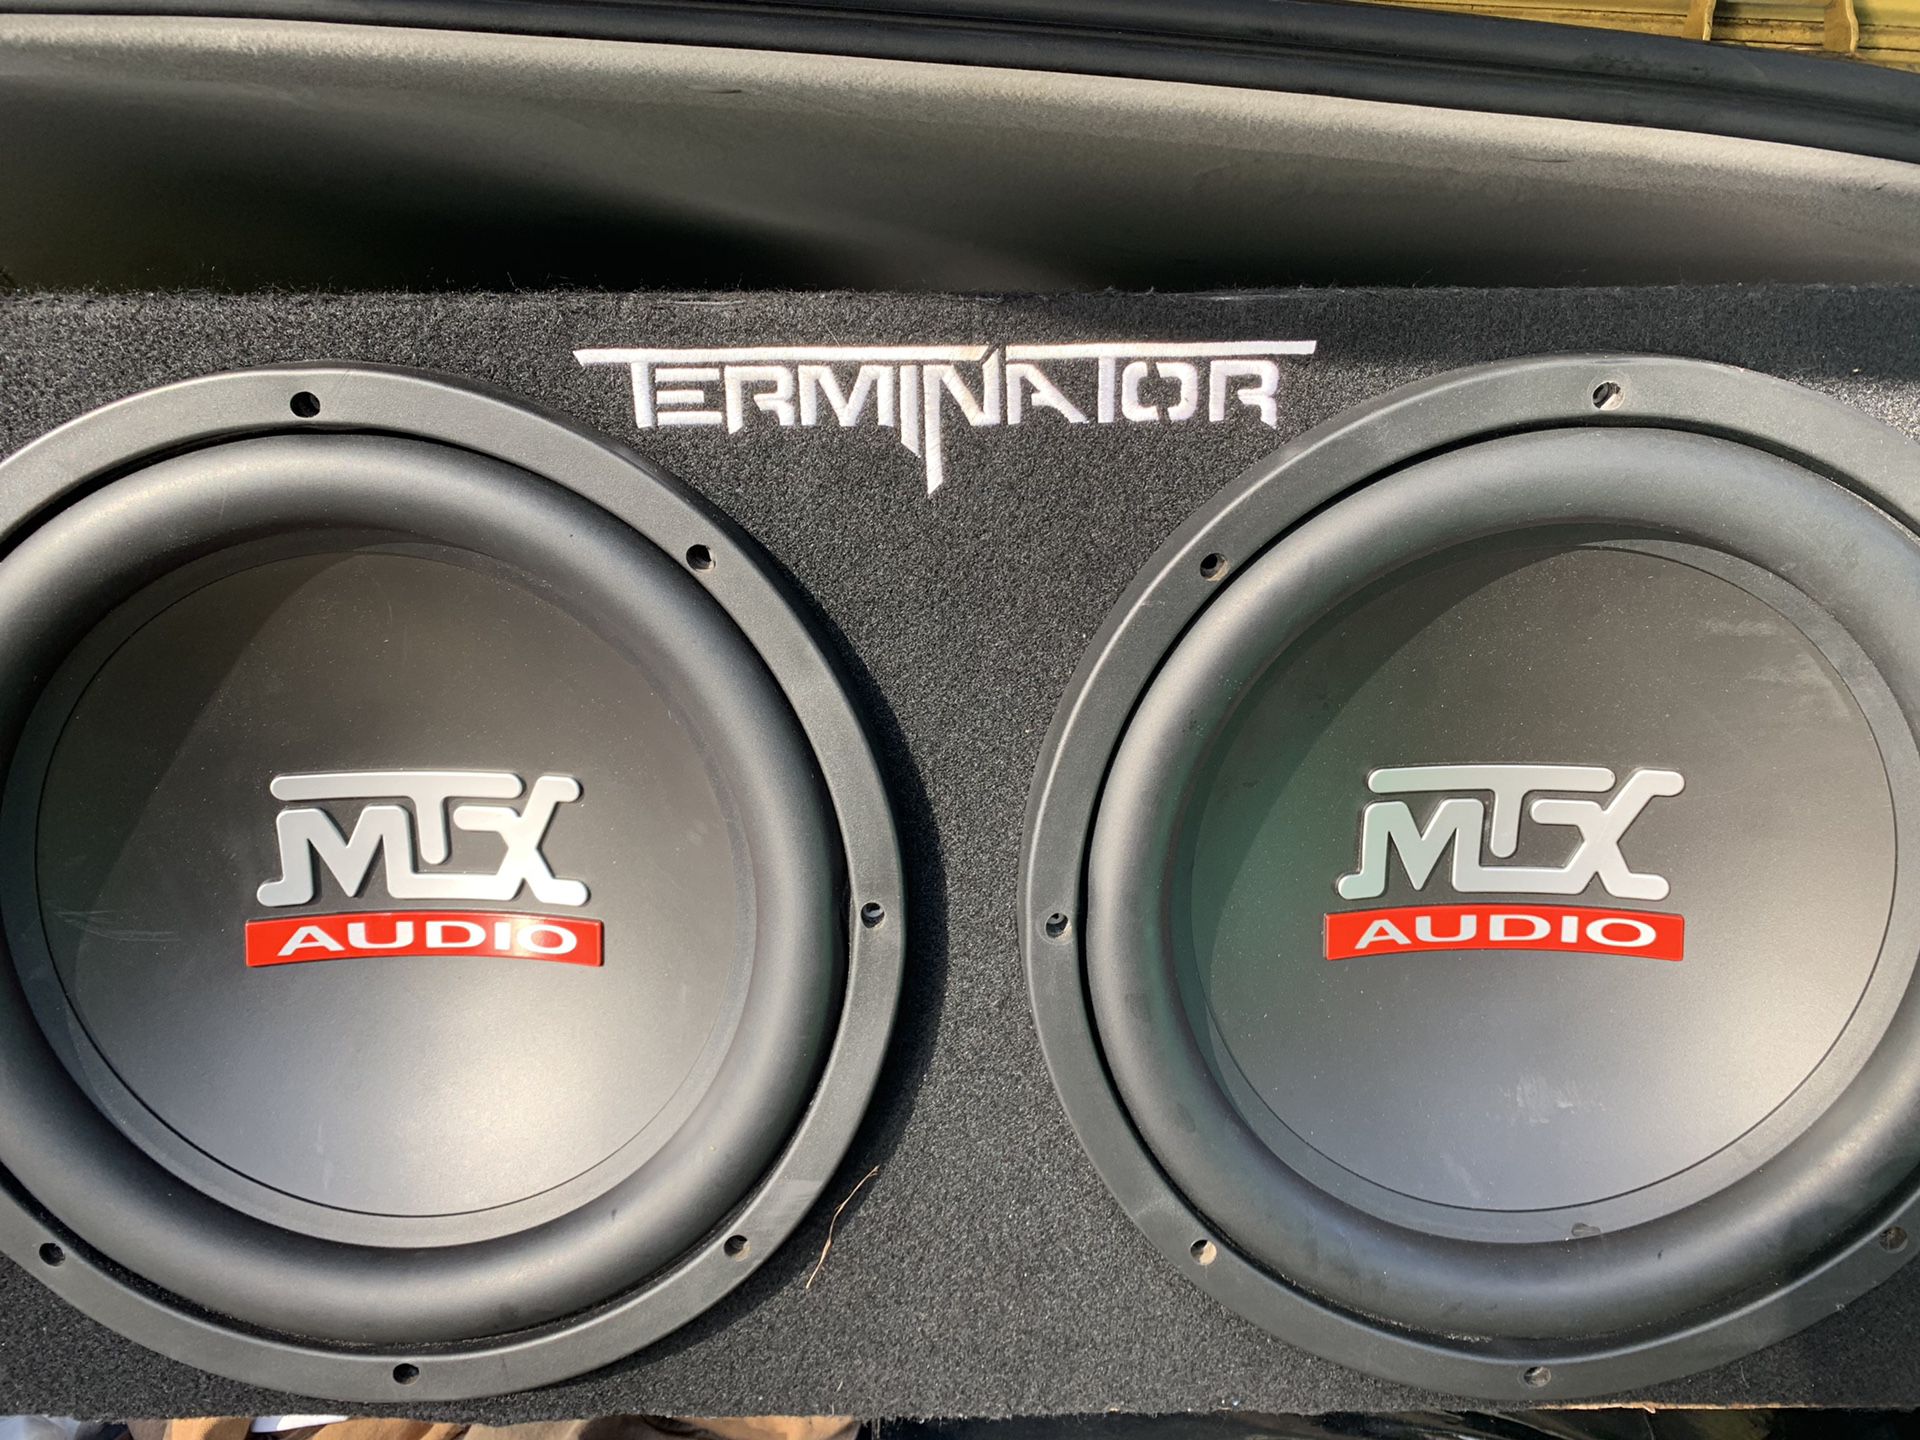 Mtx Audio speakers